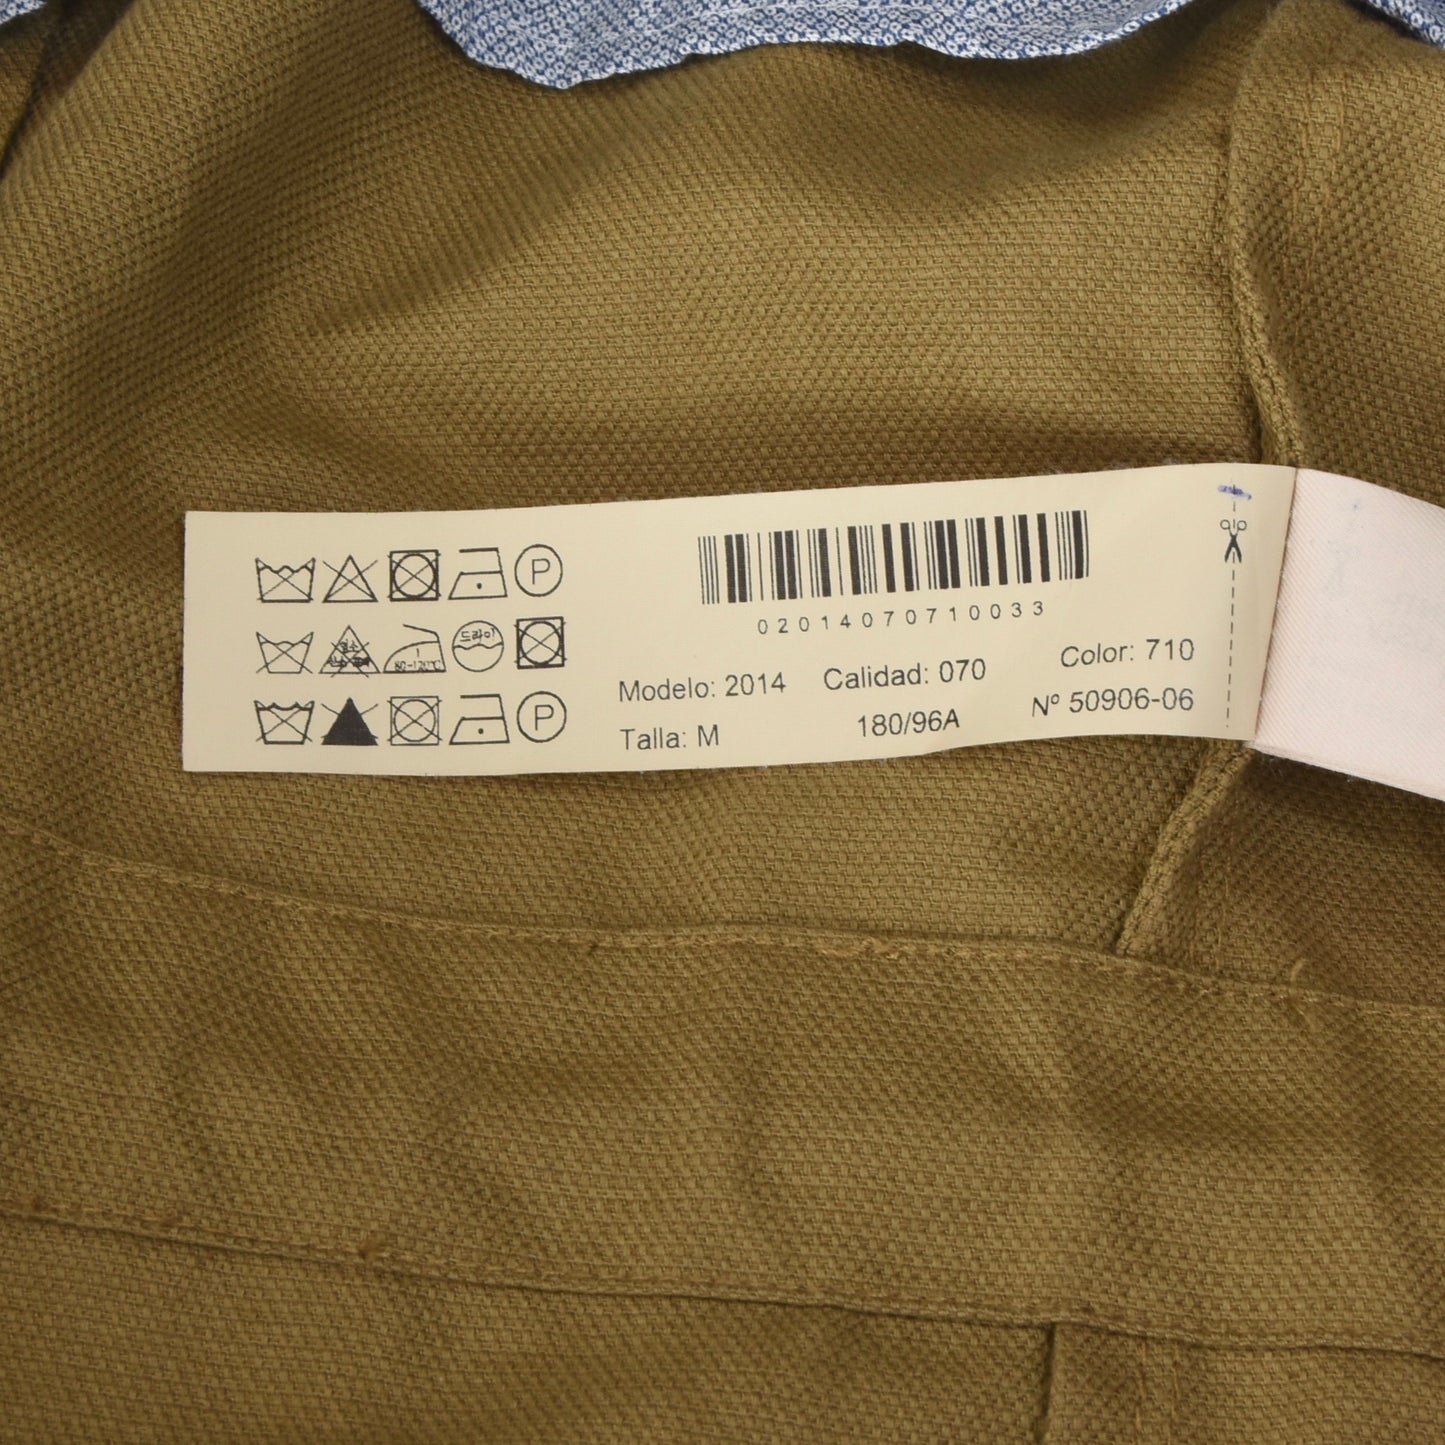 Massimo Dutti Cotton-Linen Safari Jacket Size M - Tan